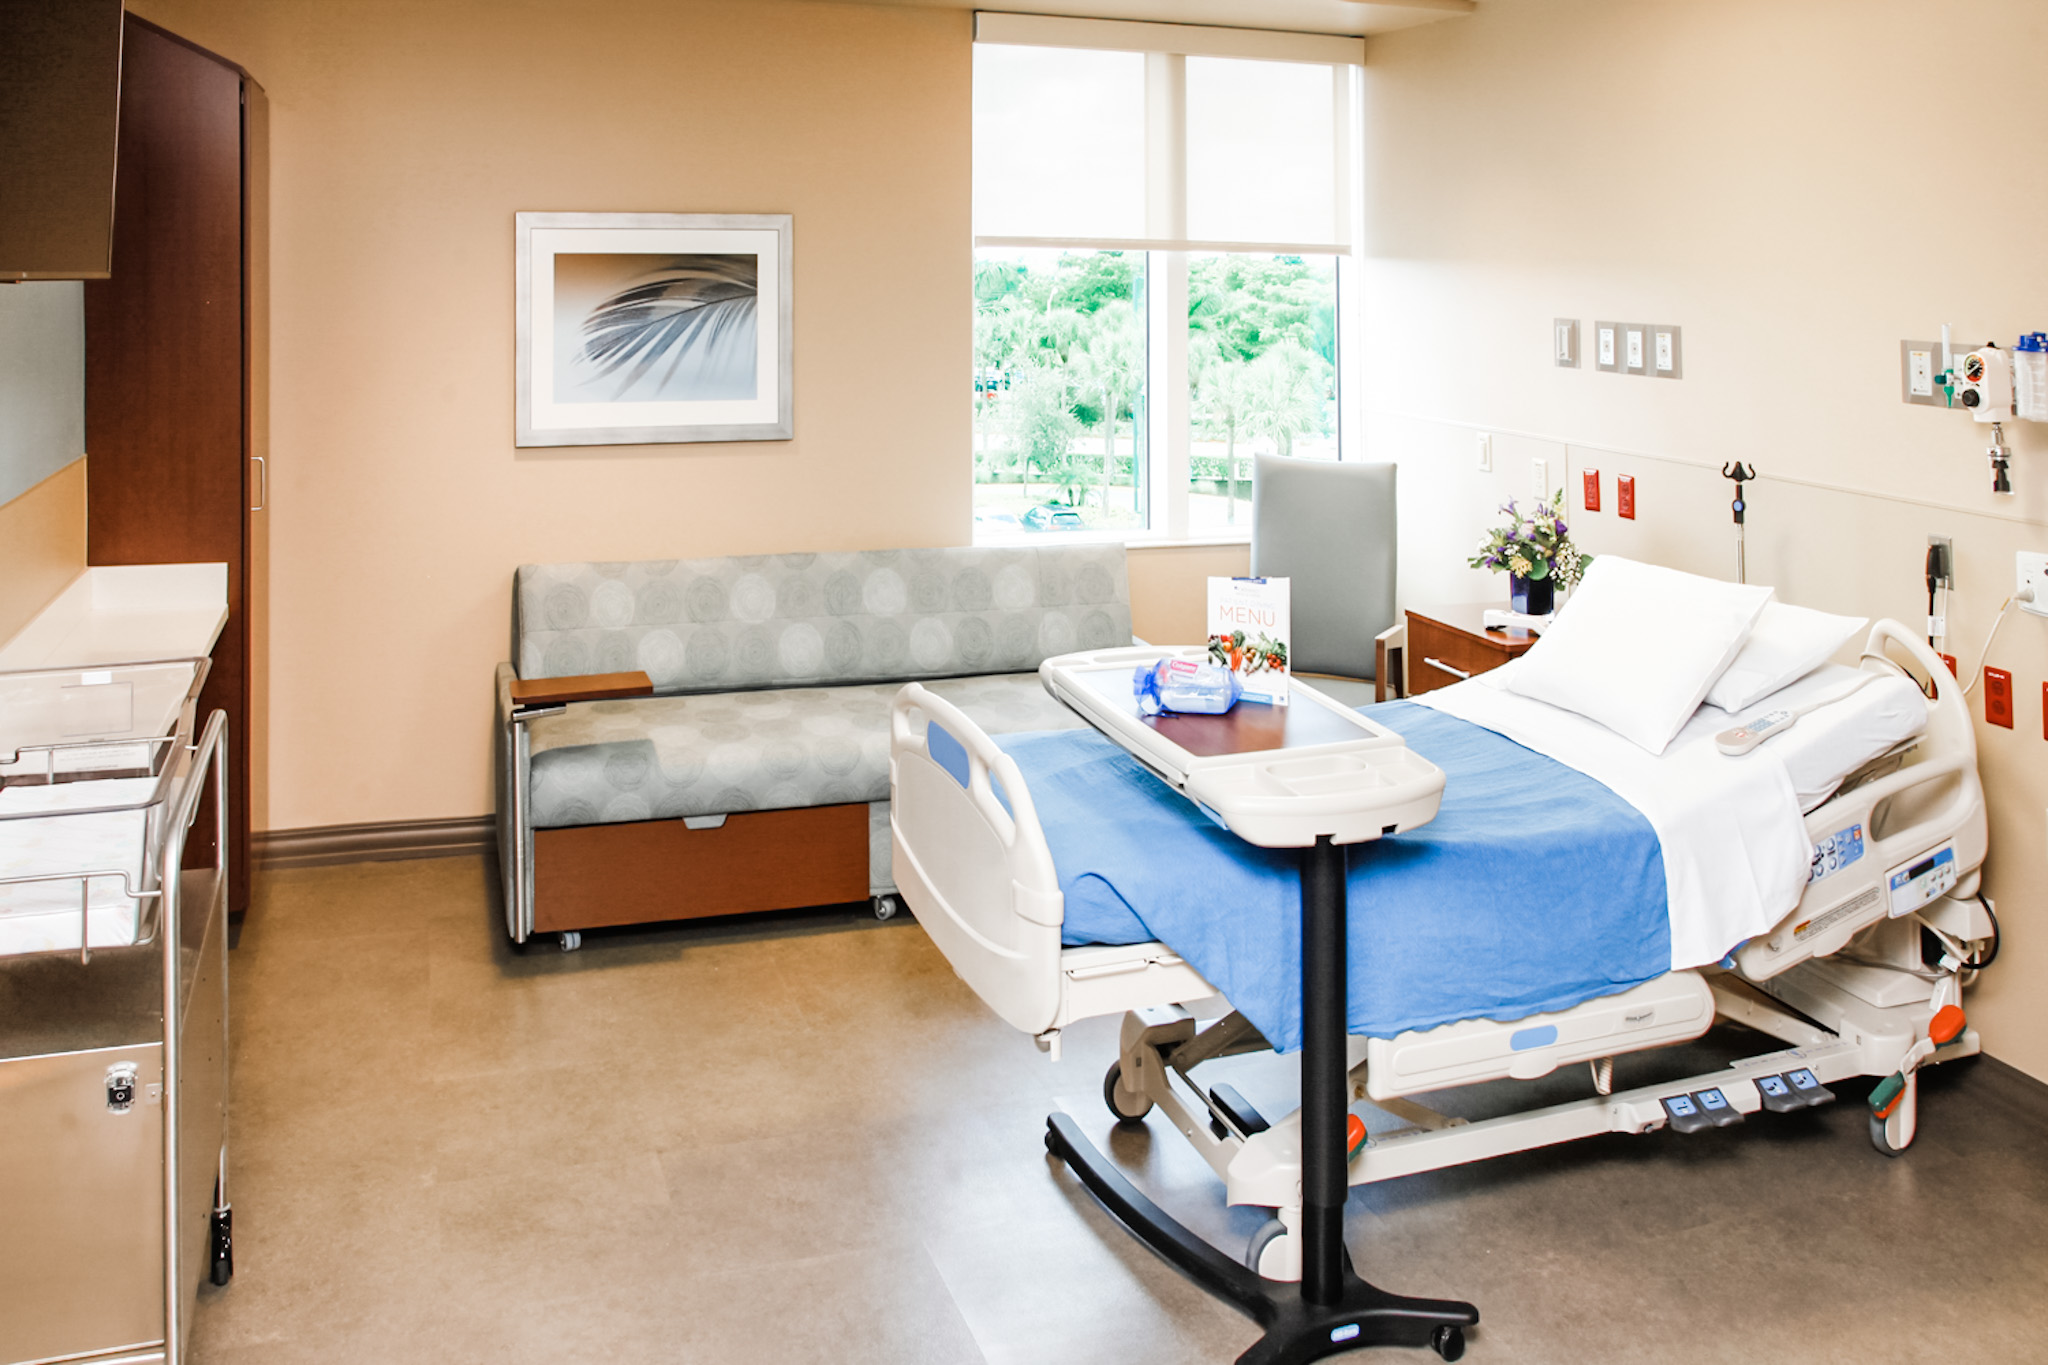 Patient Room at Northwest Medical Center.